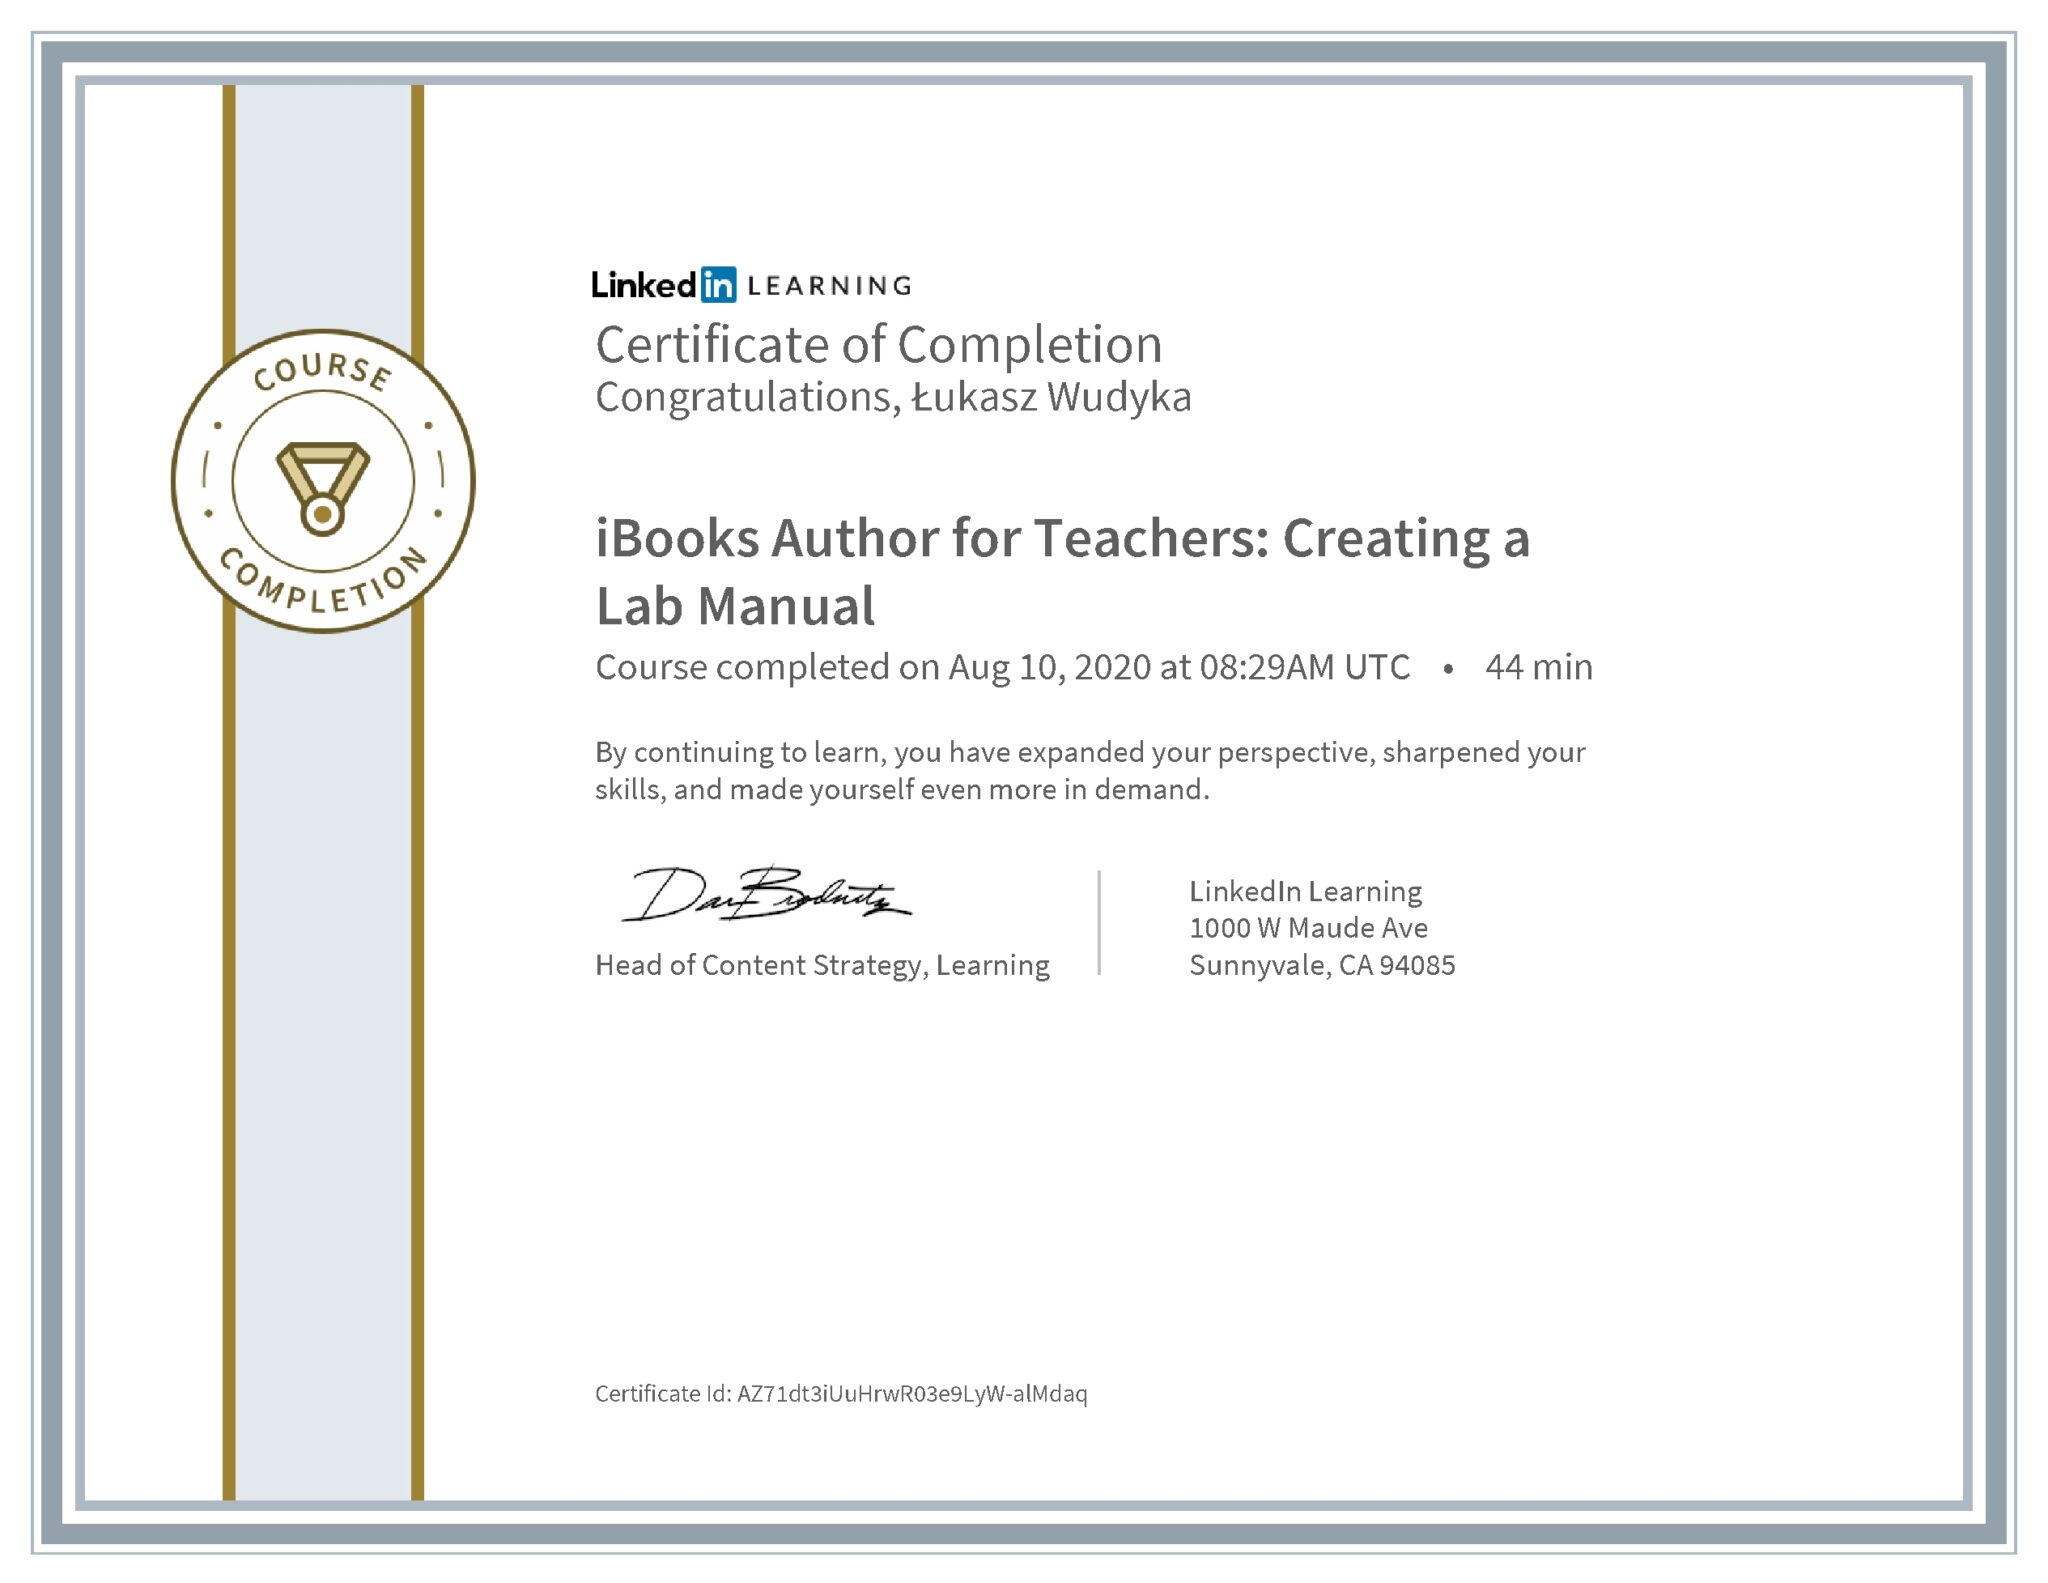 Łukasz Wudyka certyfikat LinkedIn iBooks Author for Teachers: Creating a Lab Manual